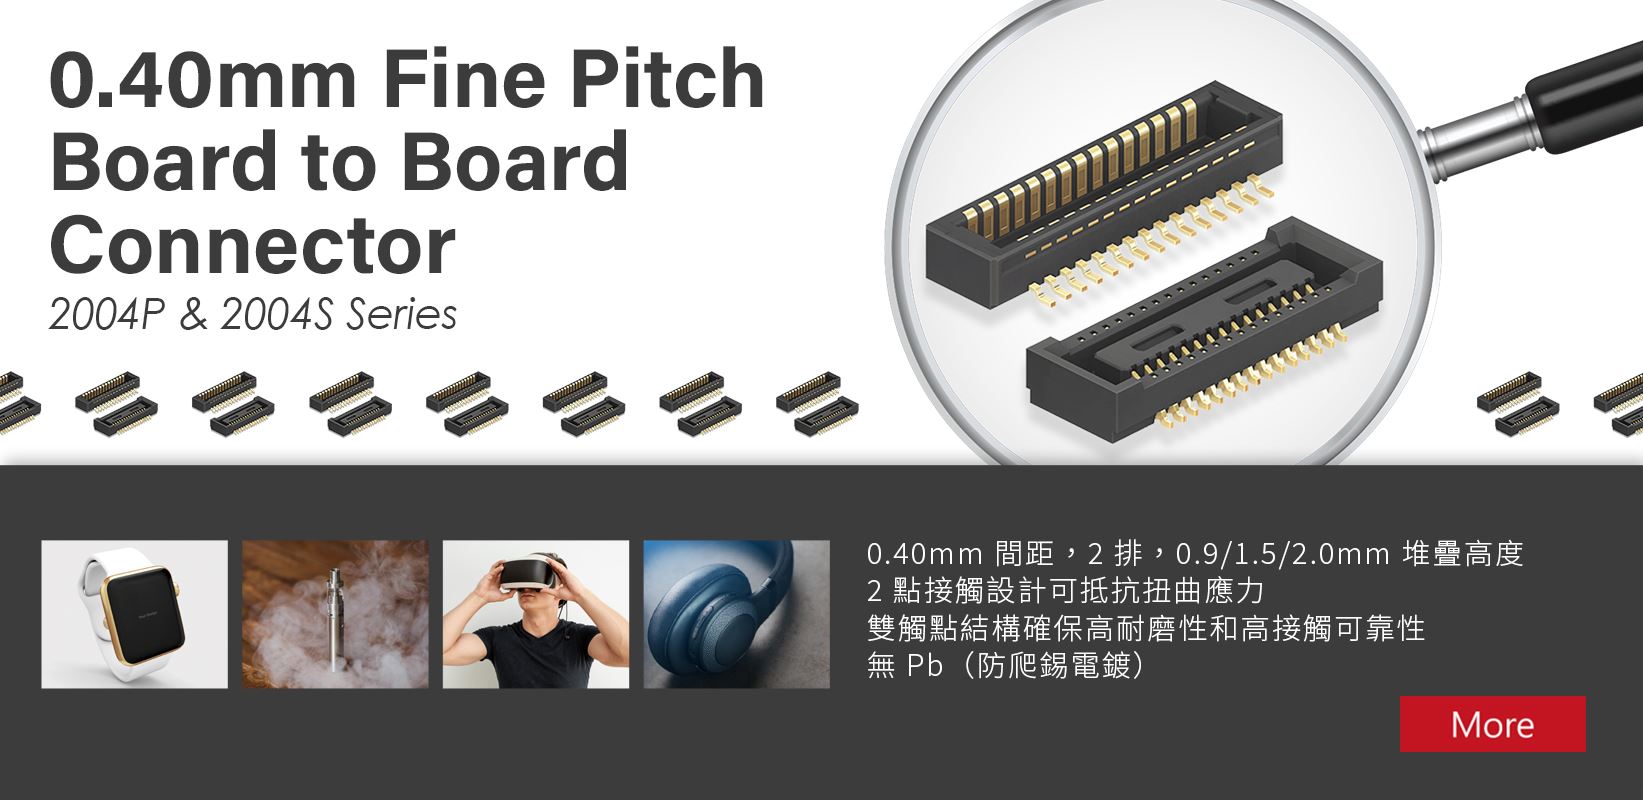 0.40mm Fine Pitch Board to Board Plug To Socket